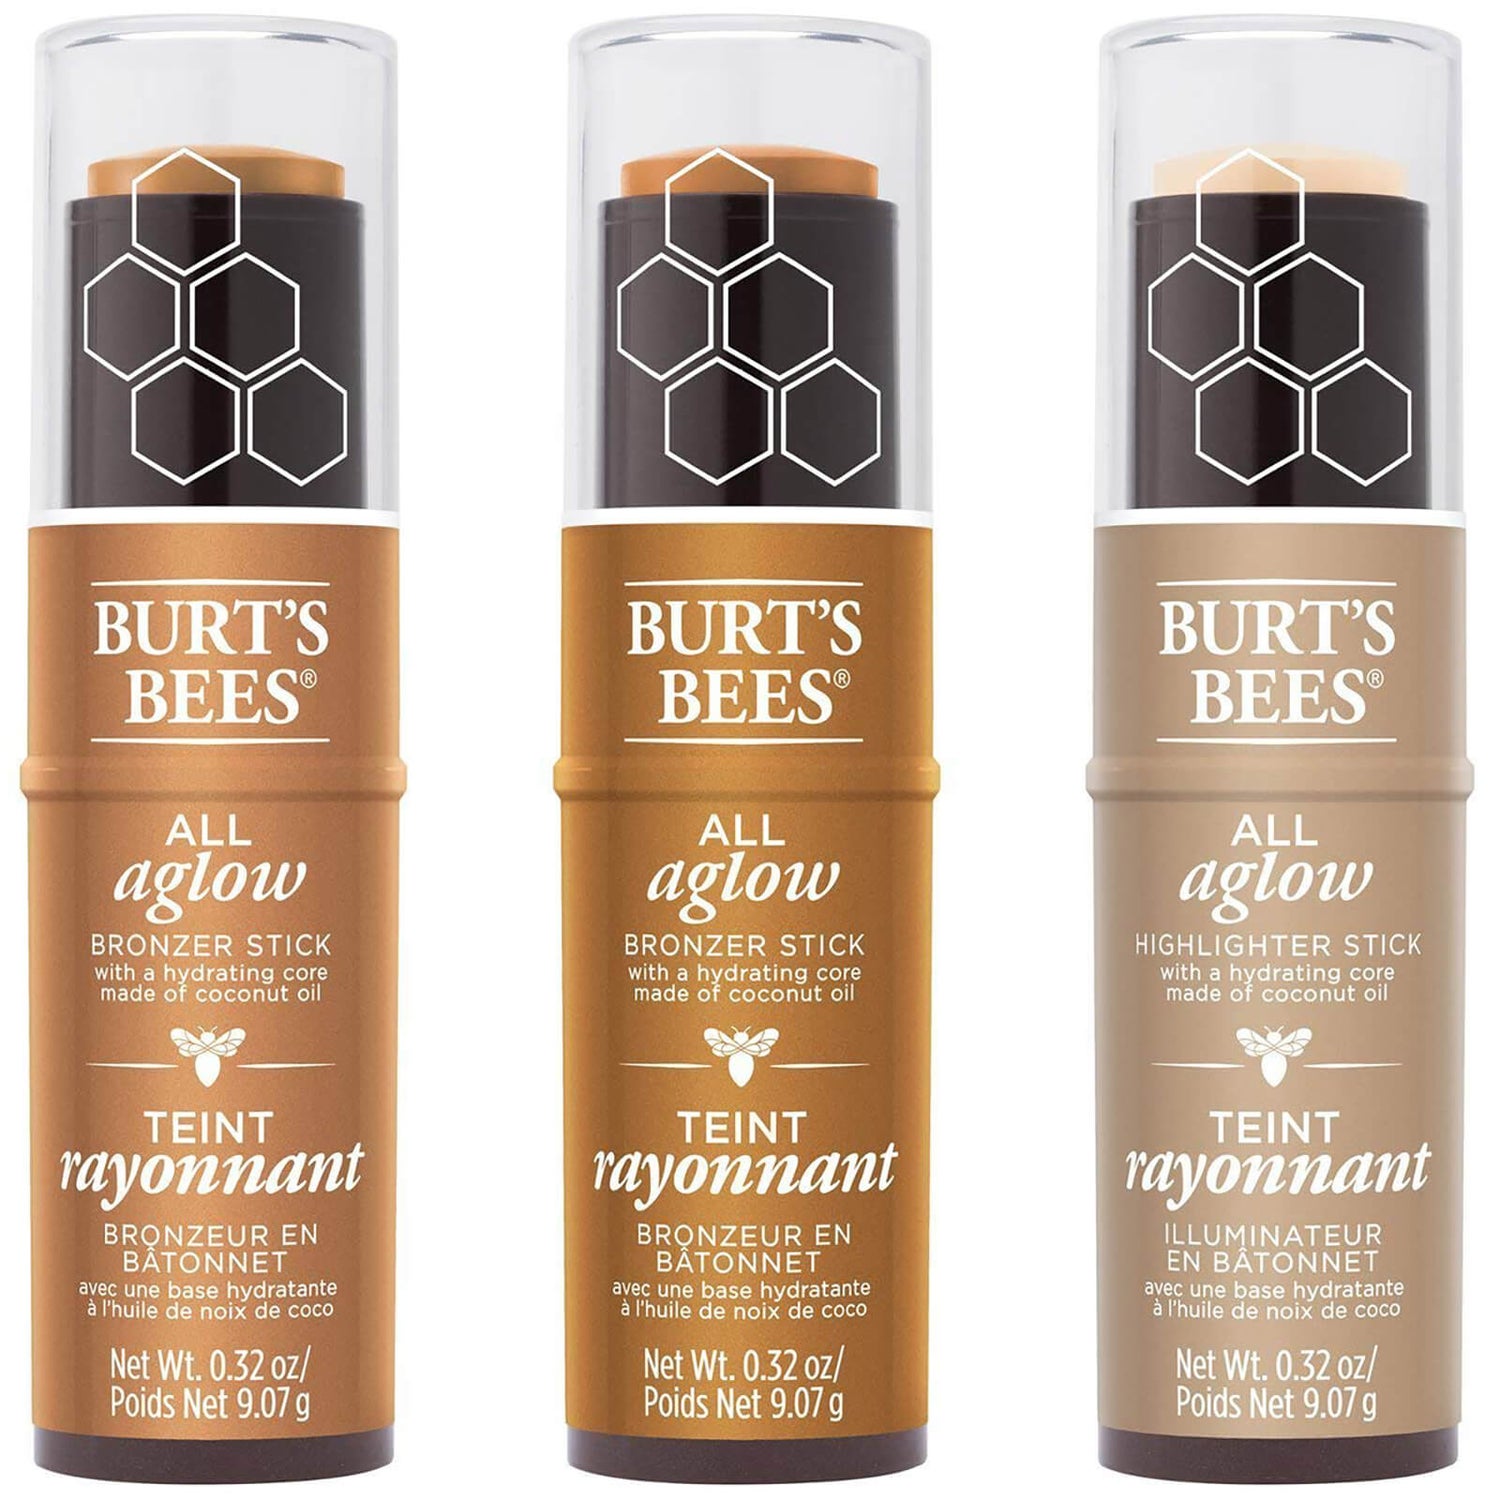 Burt's Bees 100% Natural All Aglow Highlighter Stick 8.5g (Various Shades)